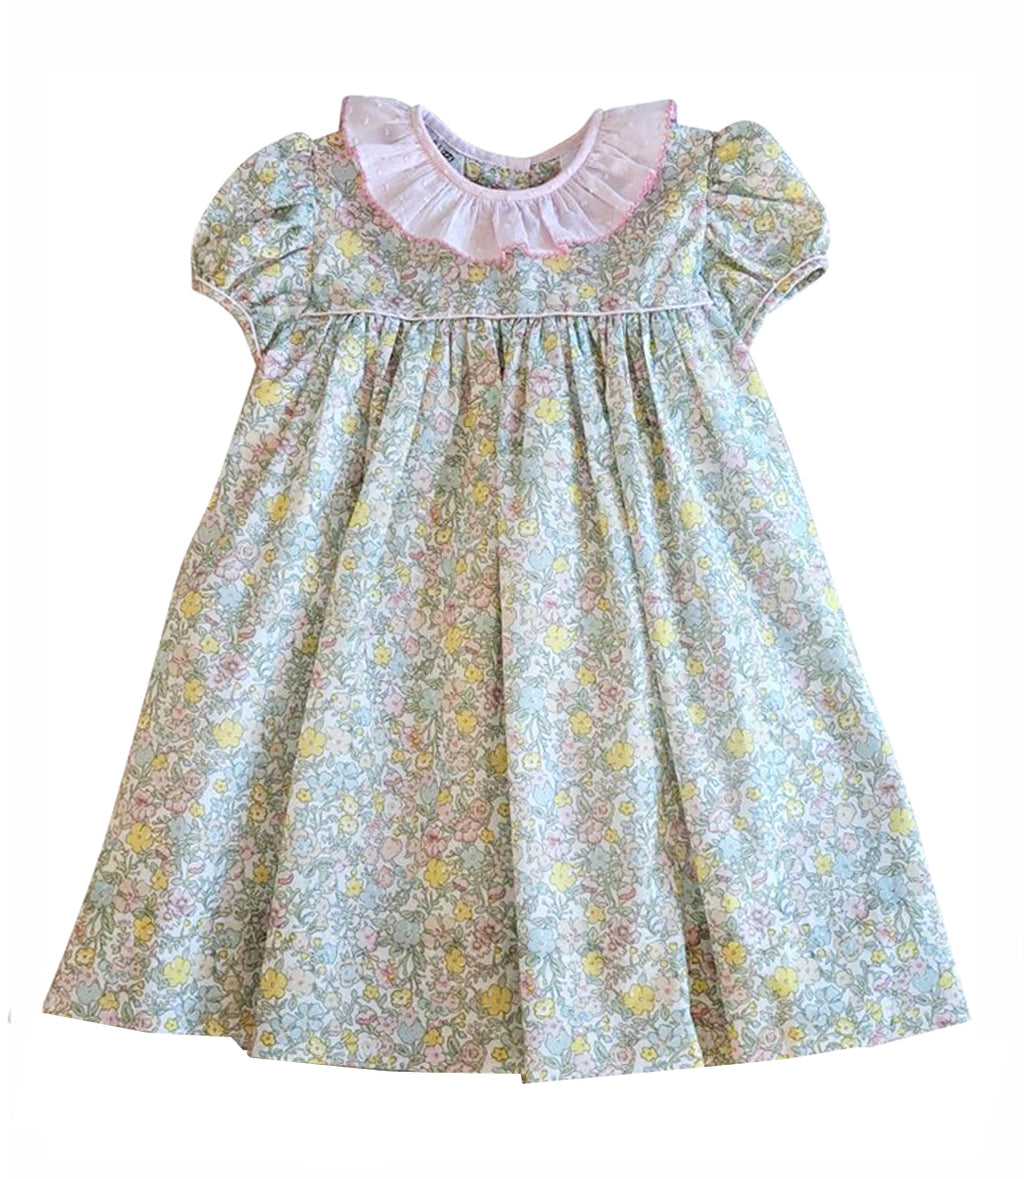 Spring Again Floral Float dress - Little Threads Inc. Children's Clothing